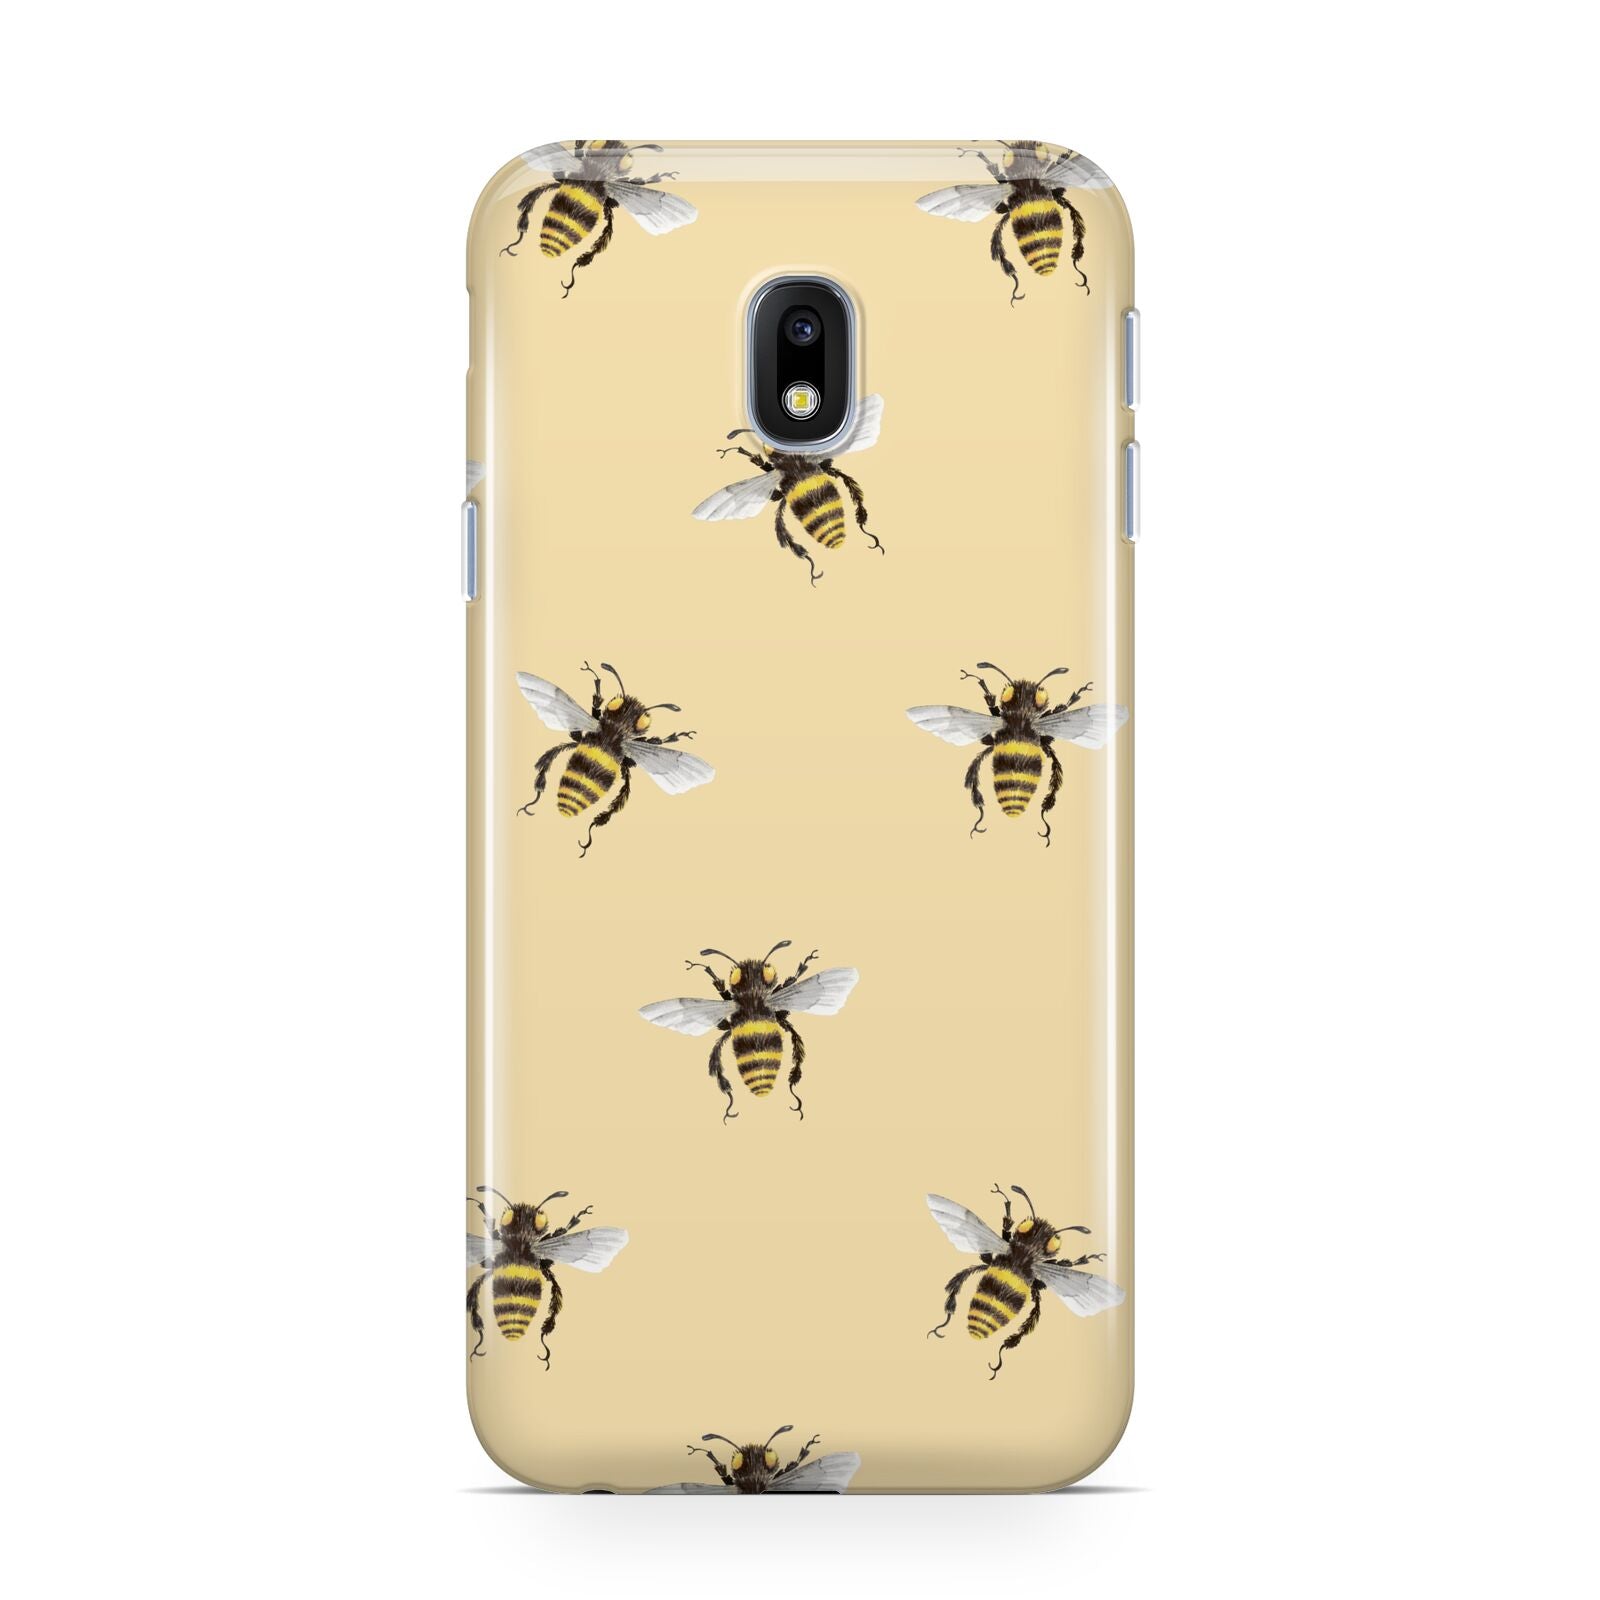 Bee Illustrations Samsung Galaxy J3 2017 Case